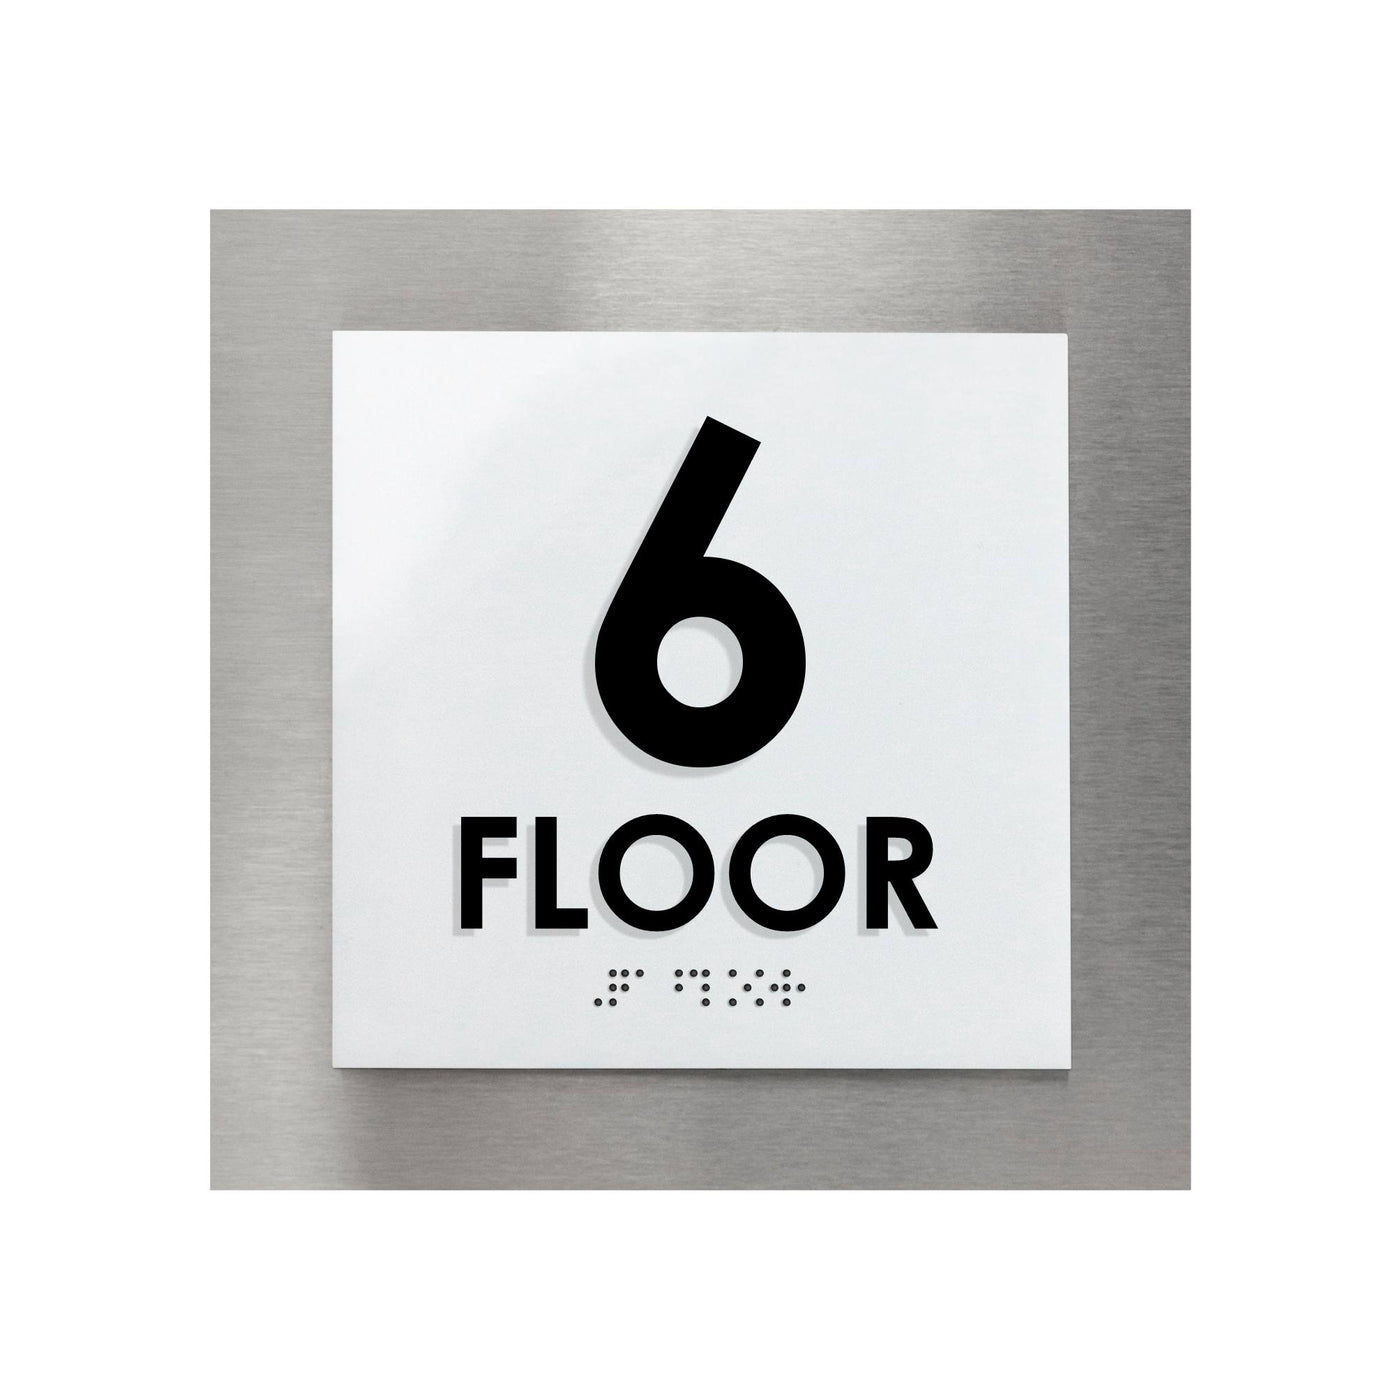 Floor Signs - Sign For 6ft Floor - Interior Stainless Steel Sign - "Modern" Design